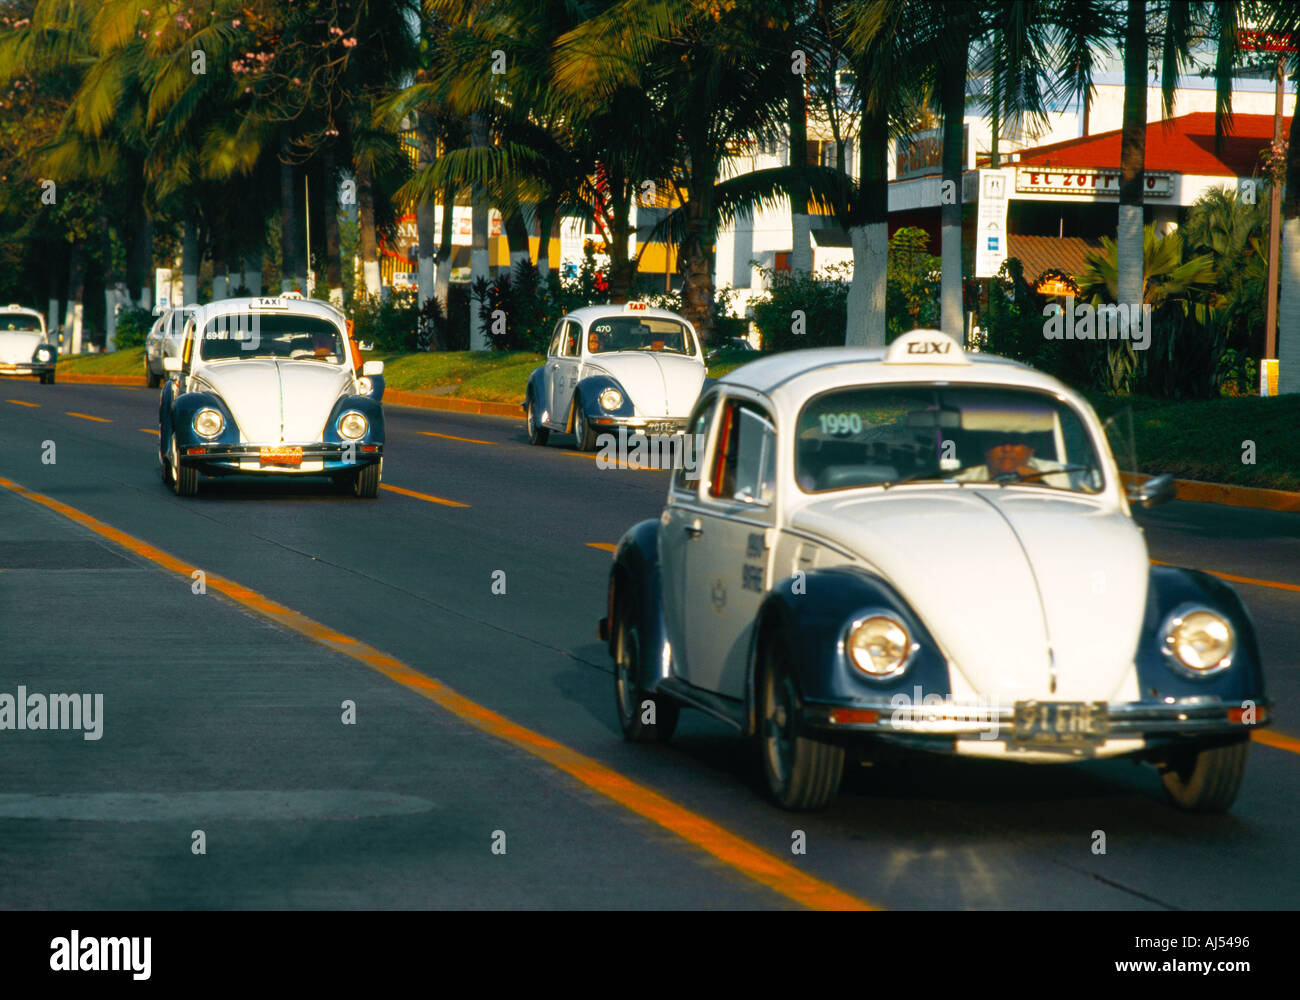 VW Coccinelle mexicaine la ligne taxis busy urban street Banque D'Images